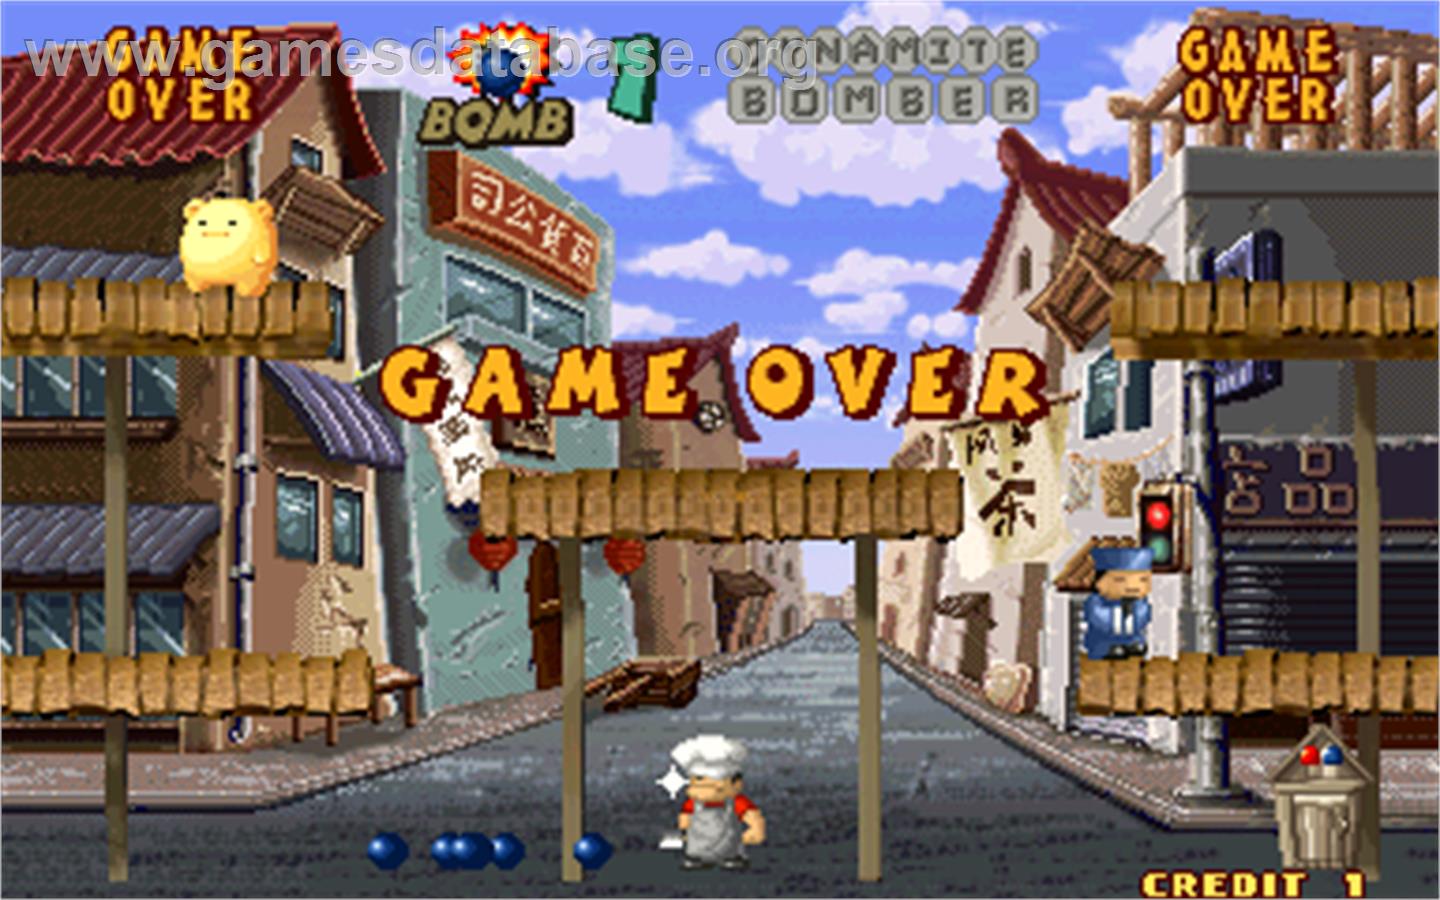 Dynamite Bomber - Arcade - Artwork - Game Over Screen